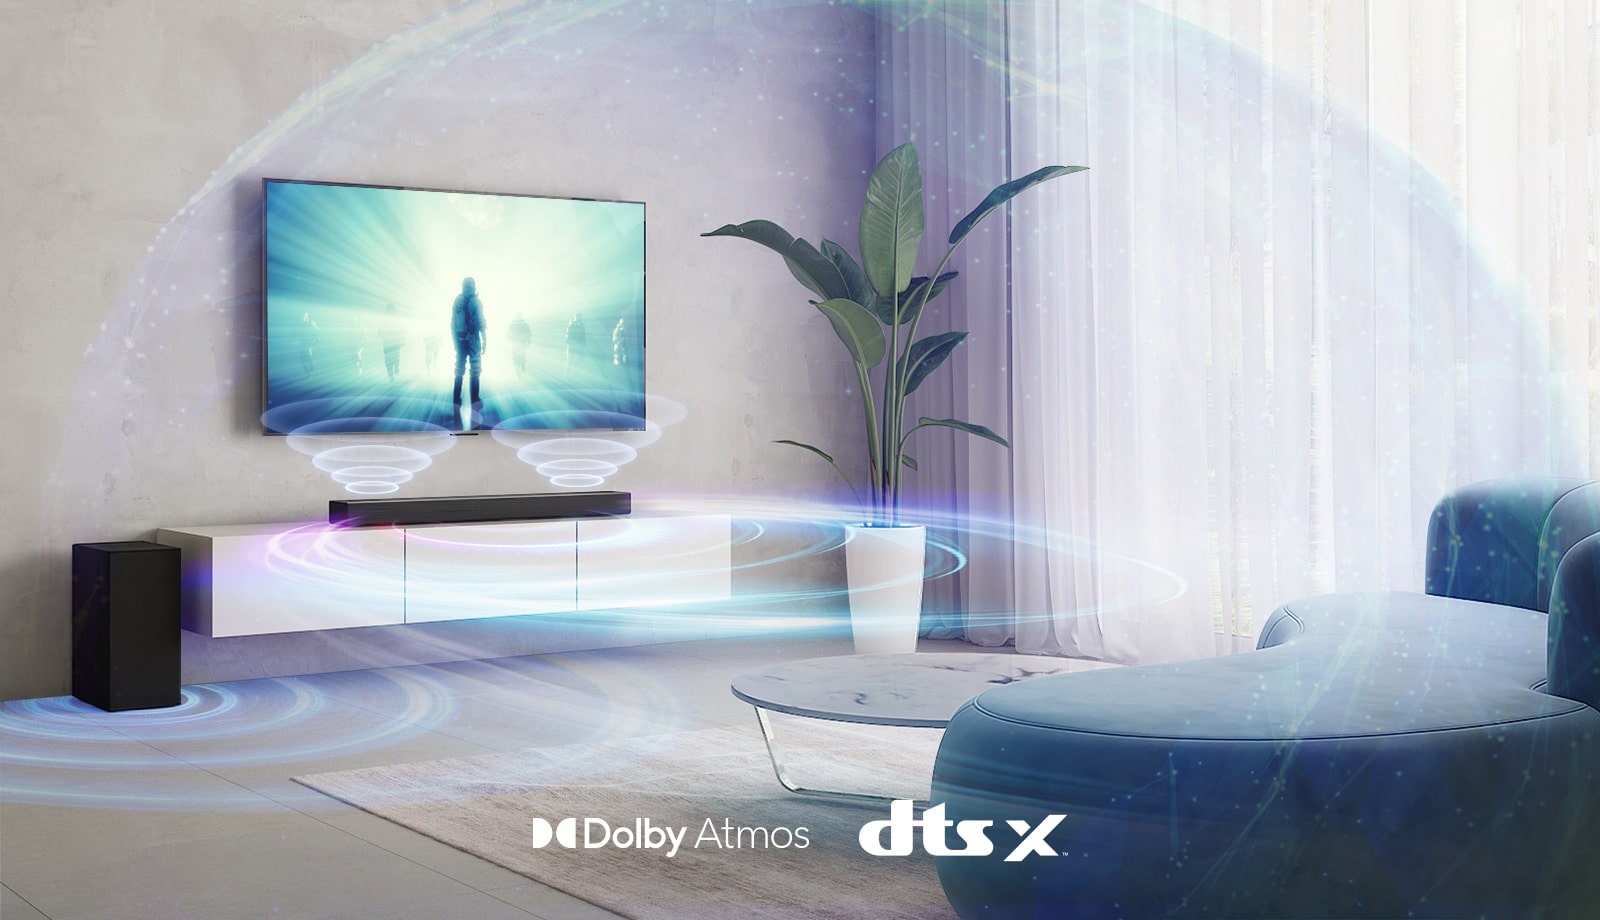 LG TV je na zidu u dnevnoj sobi. Film se prikazuje na TV ekranu. LG Soundbar zvučnik nalazi se odmah ispod televizora na bež polici, a zadnji zvučnik je postavljen sa leve strane. Logotip Dolby Atmos i DTS:X prikazuje se u srednjem donjem delu slike.